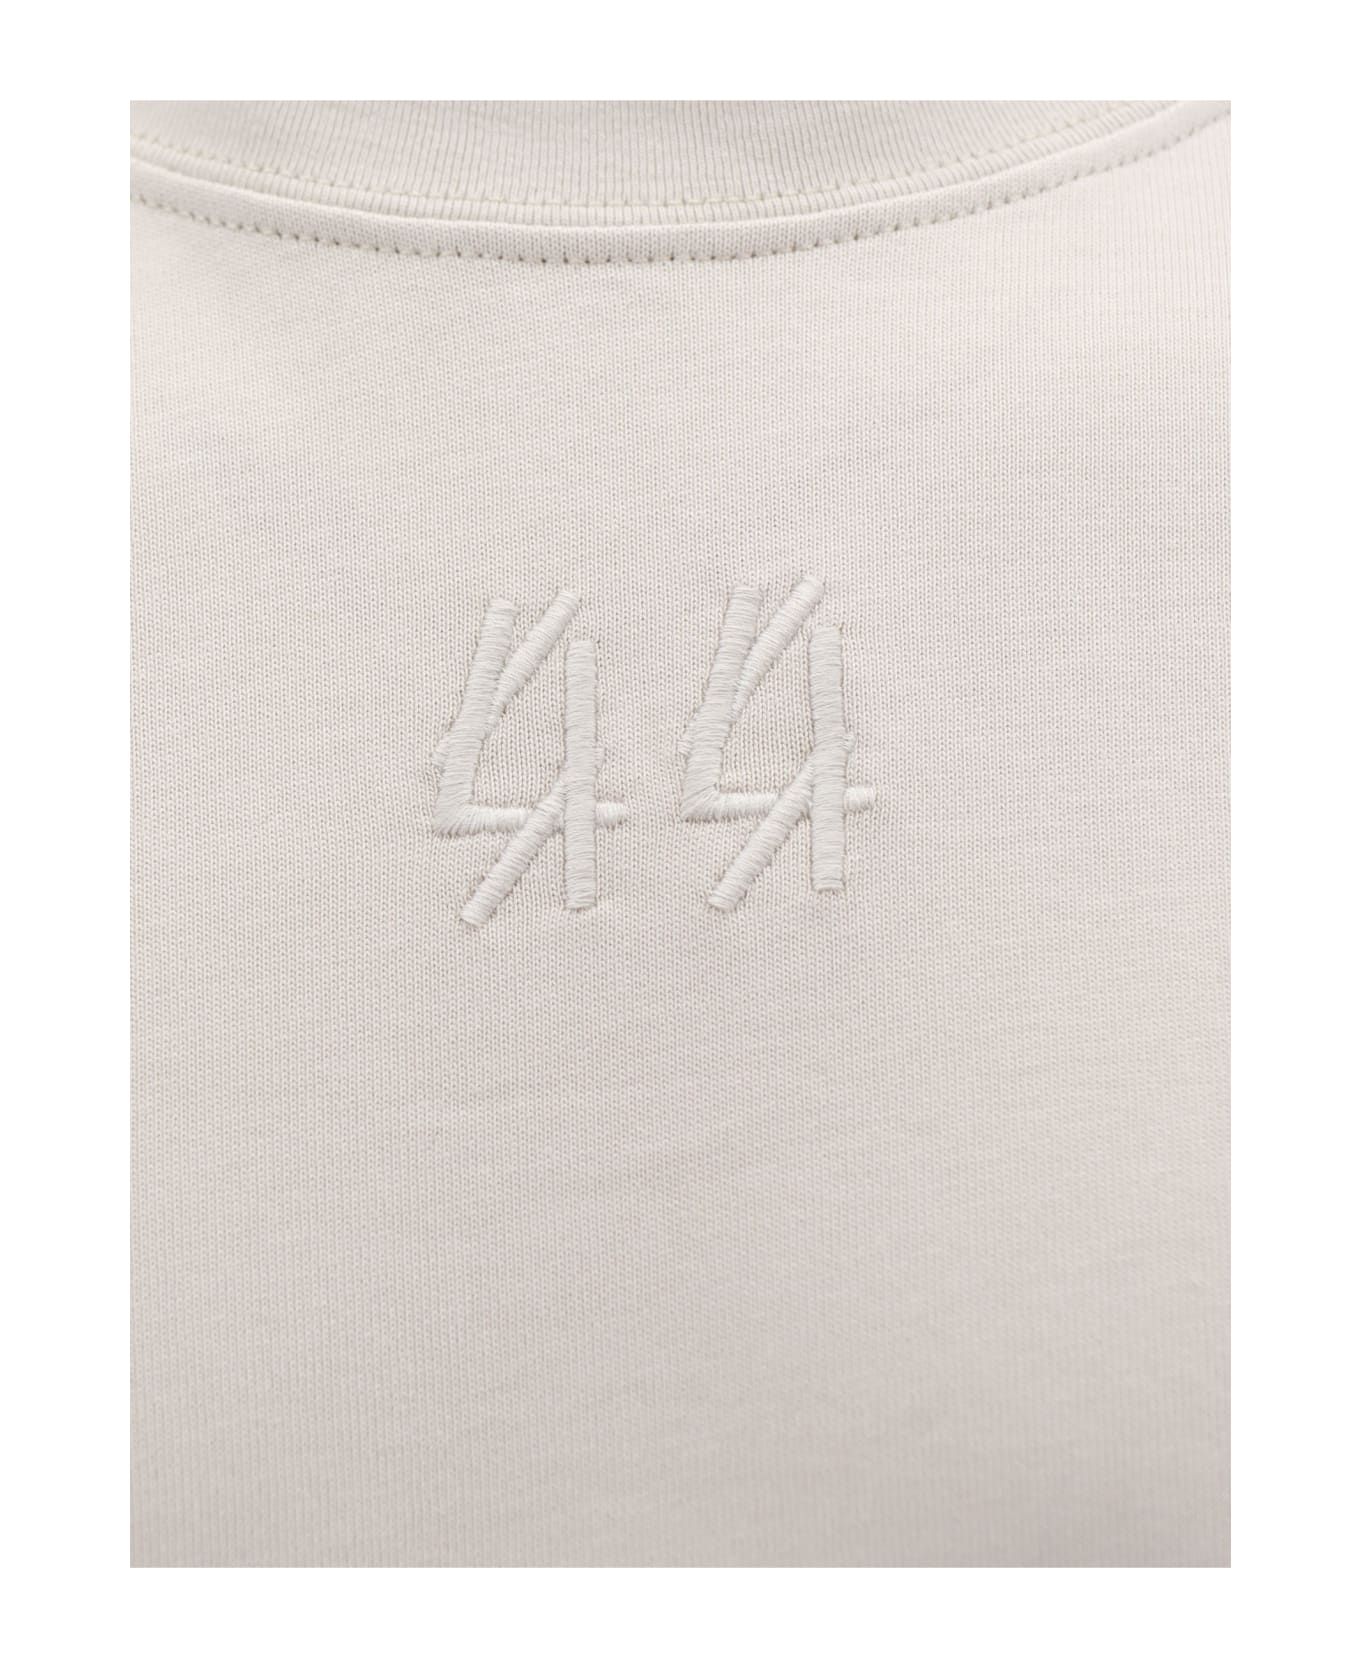 44 Label Group T-shirt - White シャツ